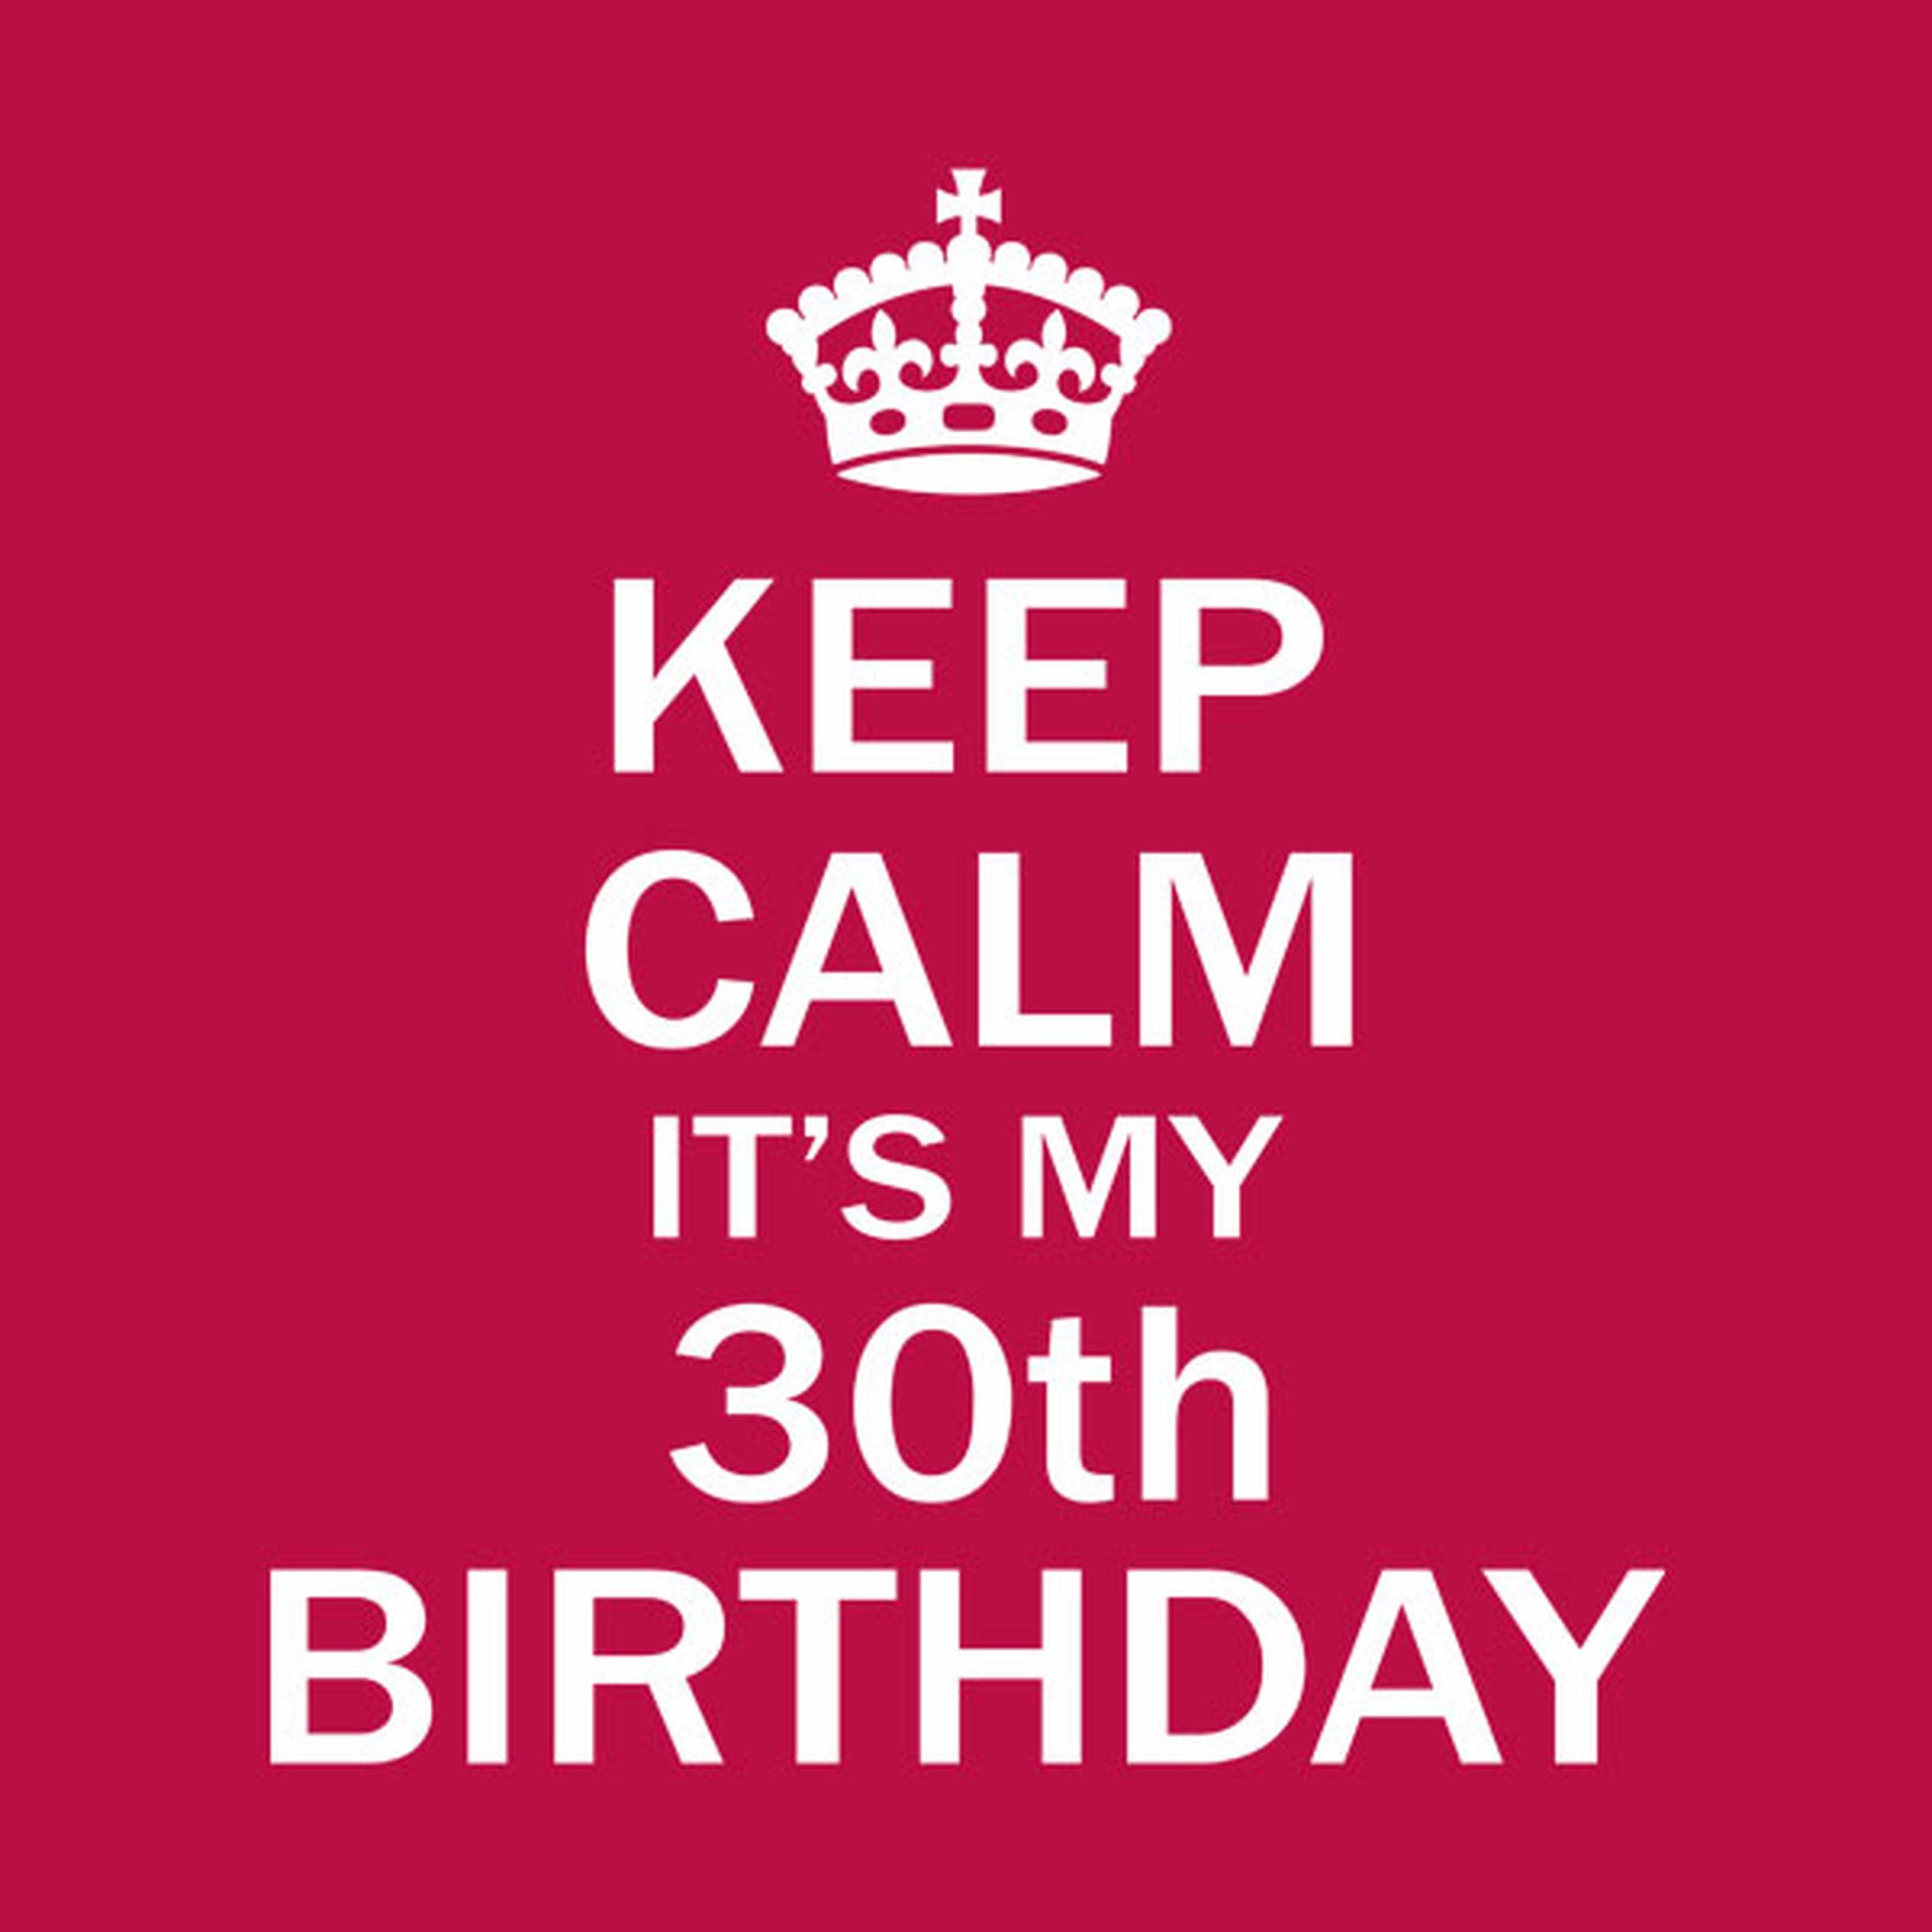 Keep calm it's my 30th birthday